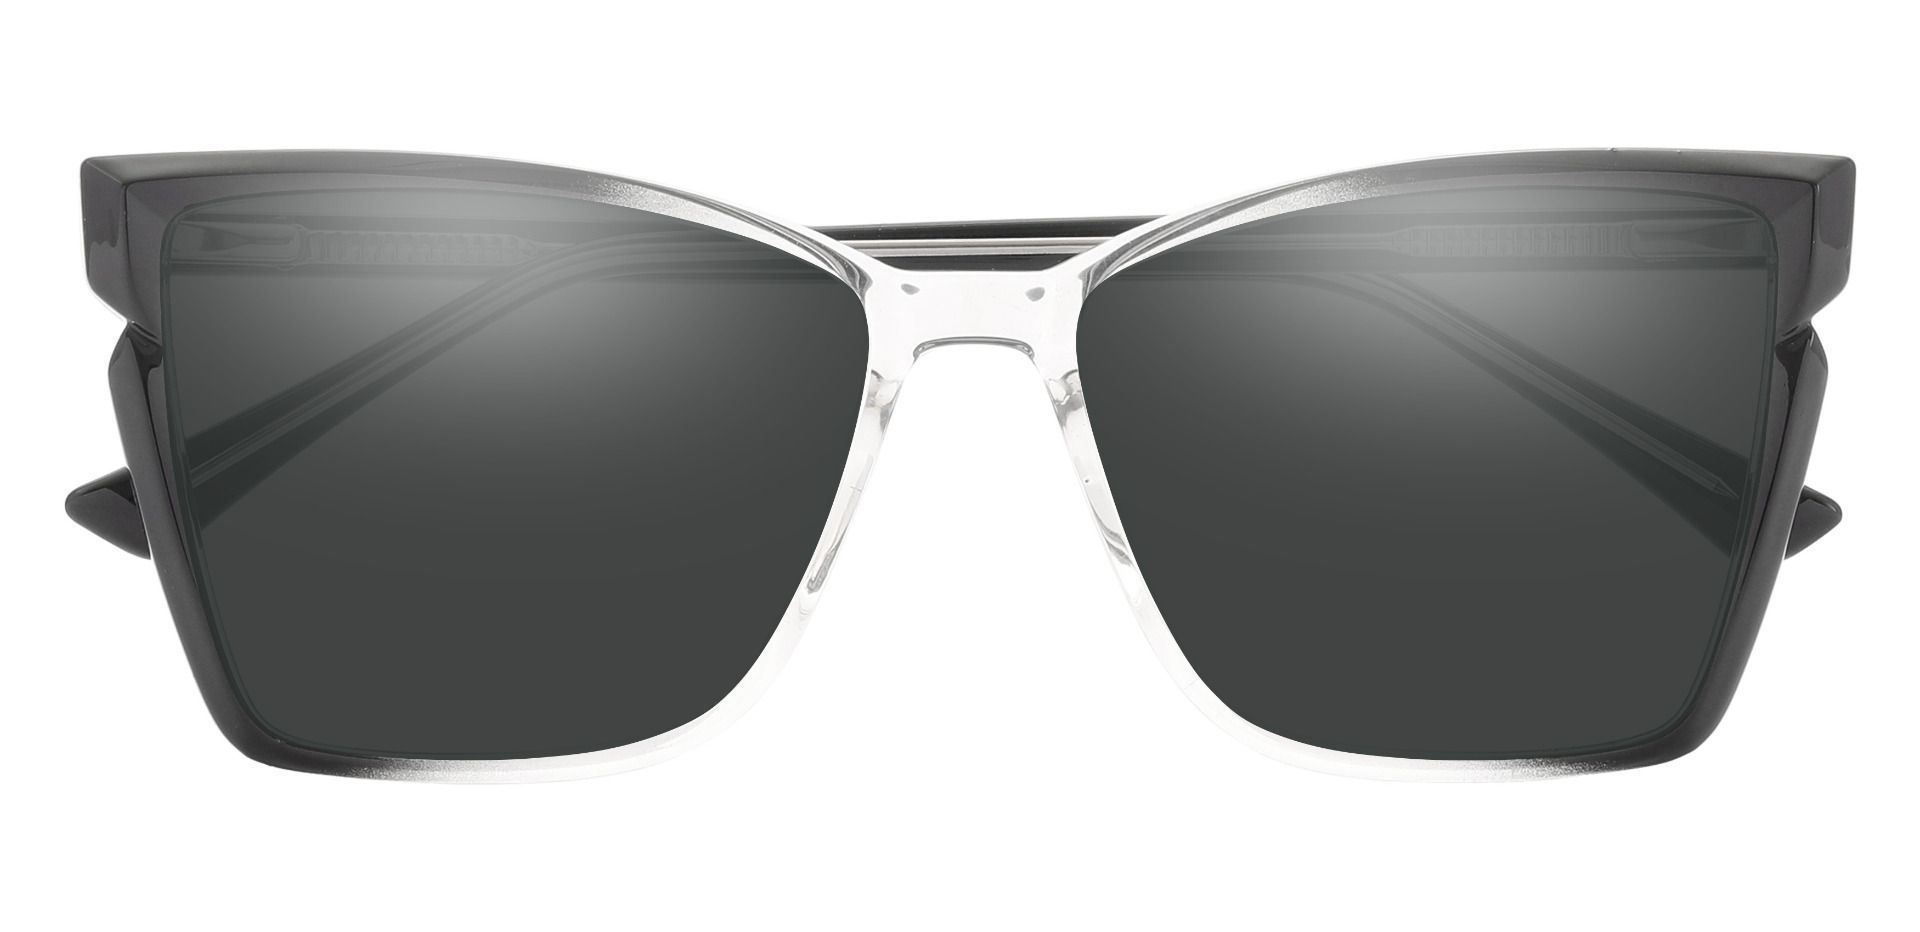 Meera Cat Eye Prescription Sunglasses - Black Frame With Gray Lenses